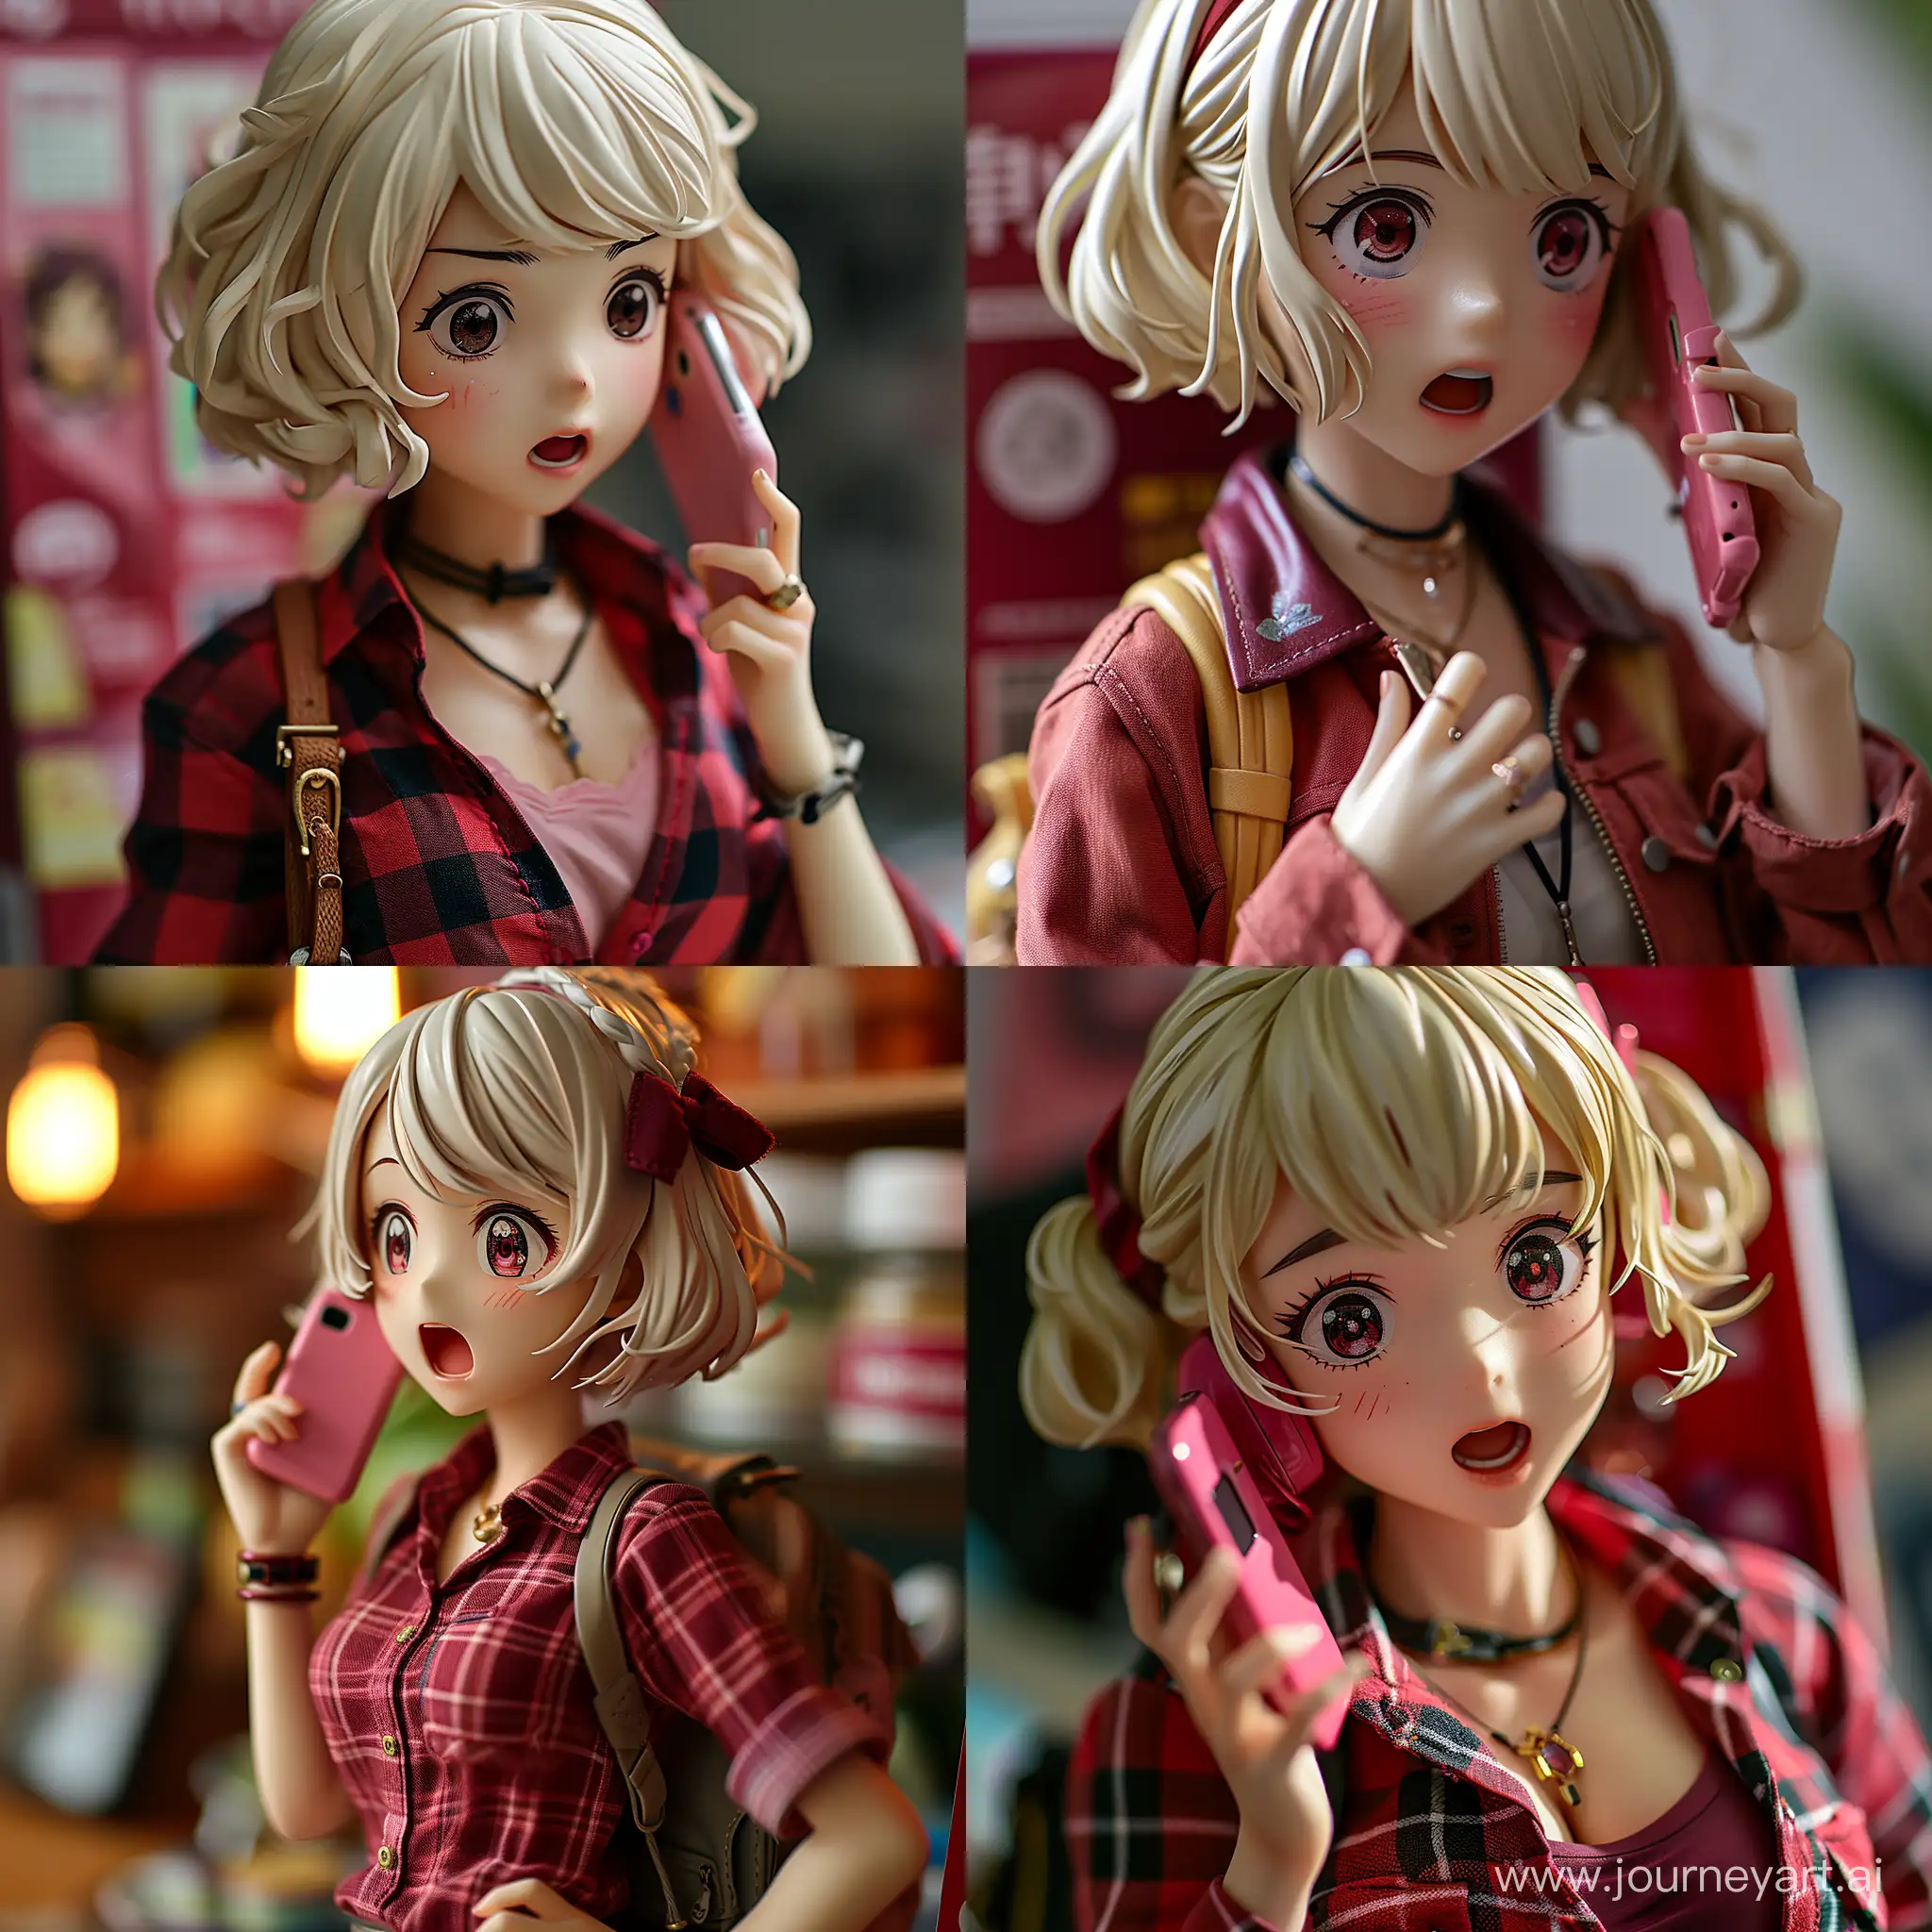 Kawaii-Anime-Figurine-Chisato-Nishikigi-in-Sealed-Retail-Box-Talking-on-Pink-Cellphone